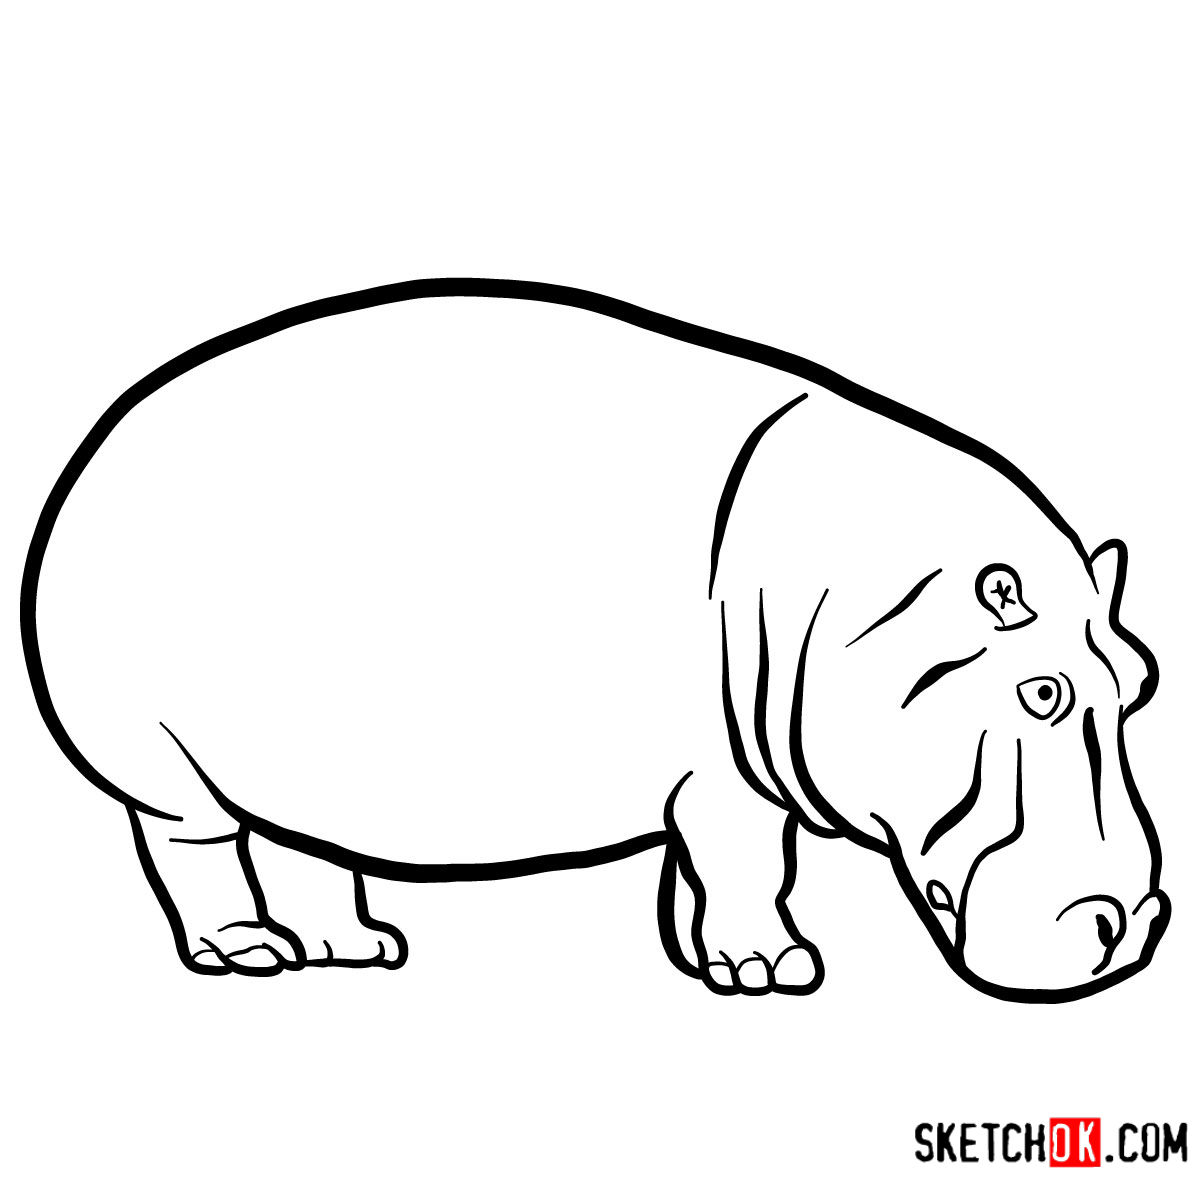 How to draw a Hippopotamus